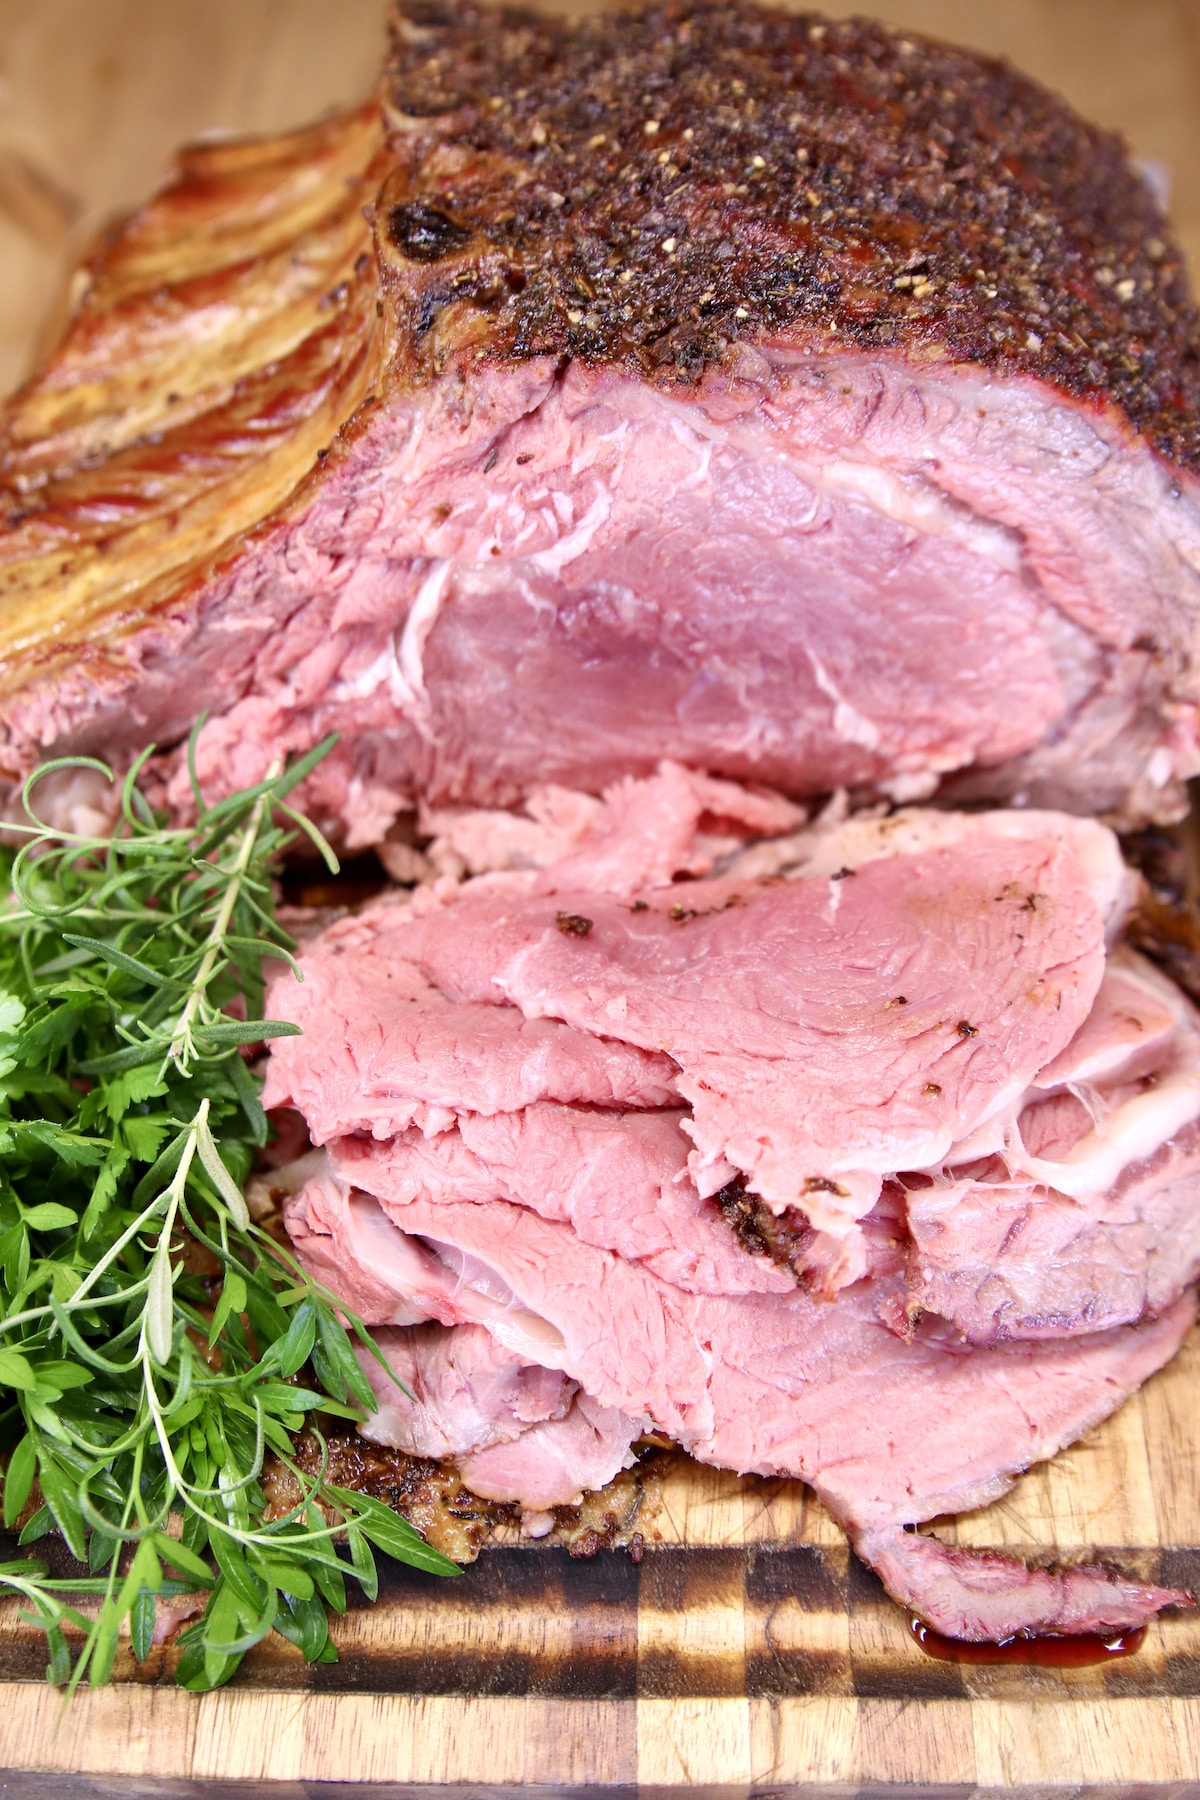 Sliced prime rib roast - bone-in, on cutting board.